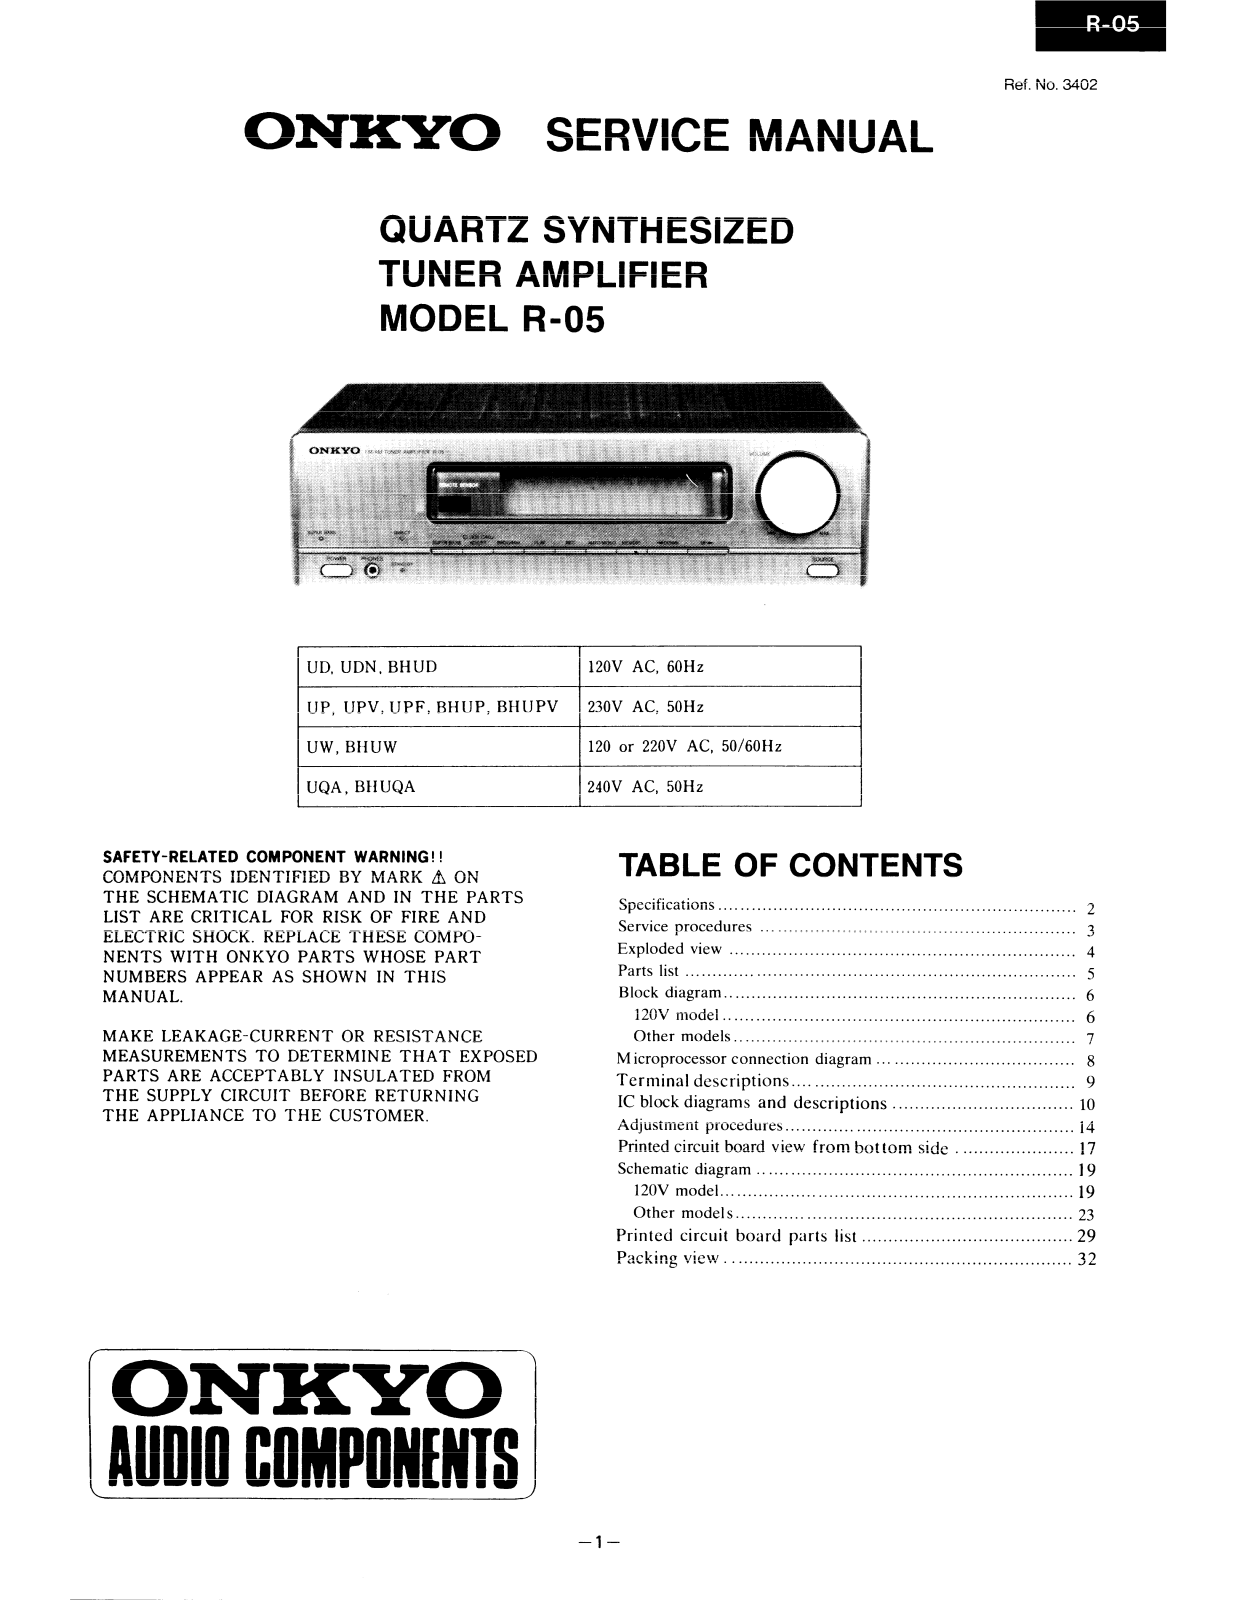 Onkyo R-05 Service Manual